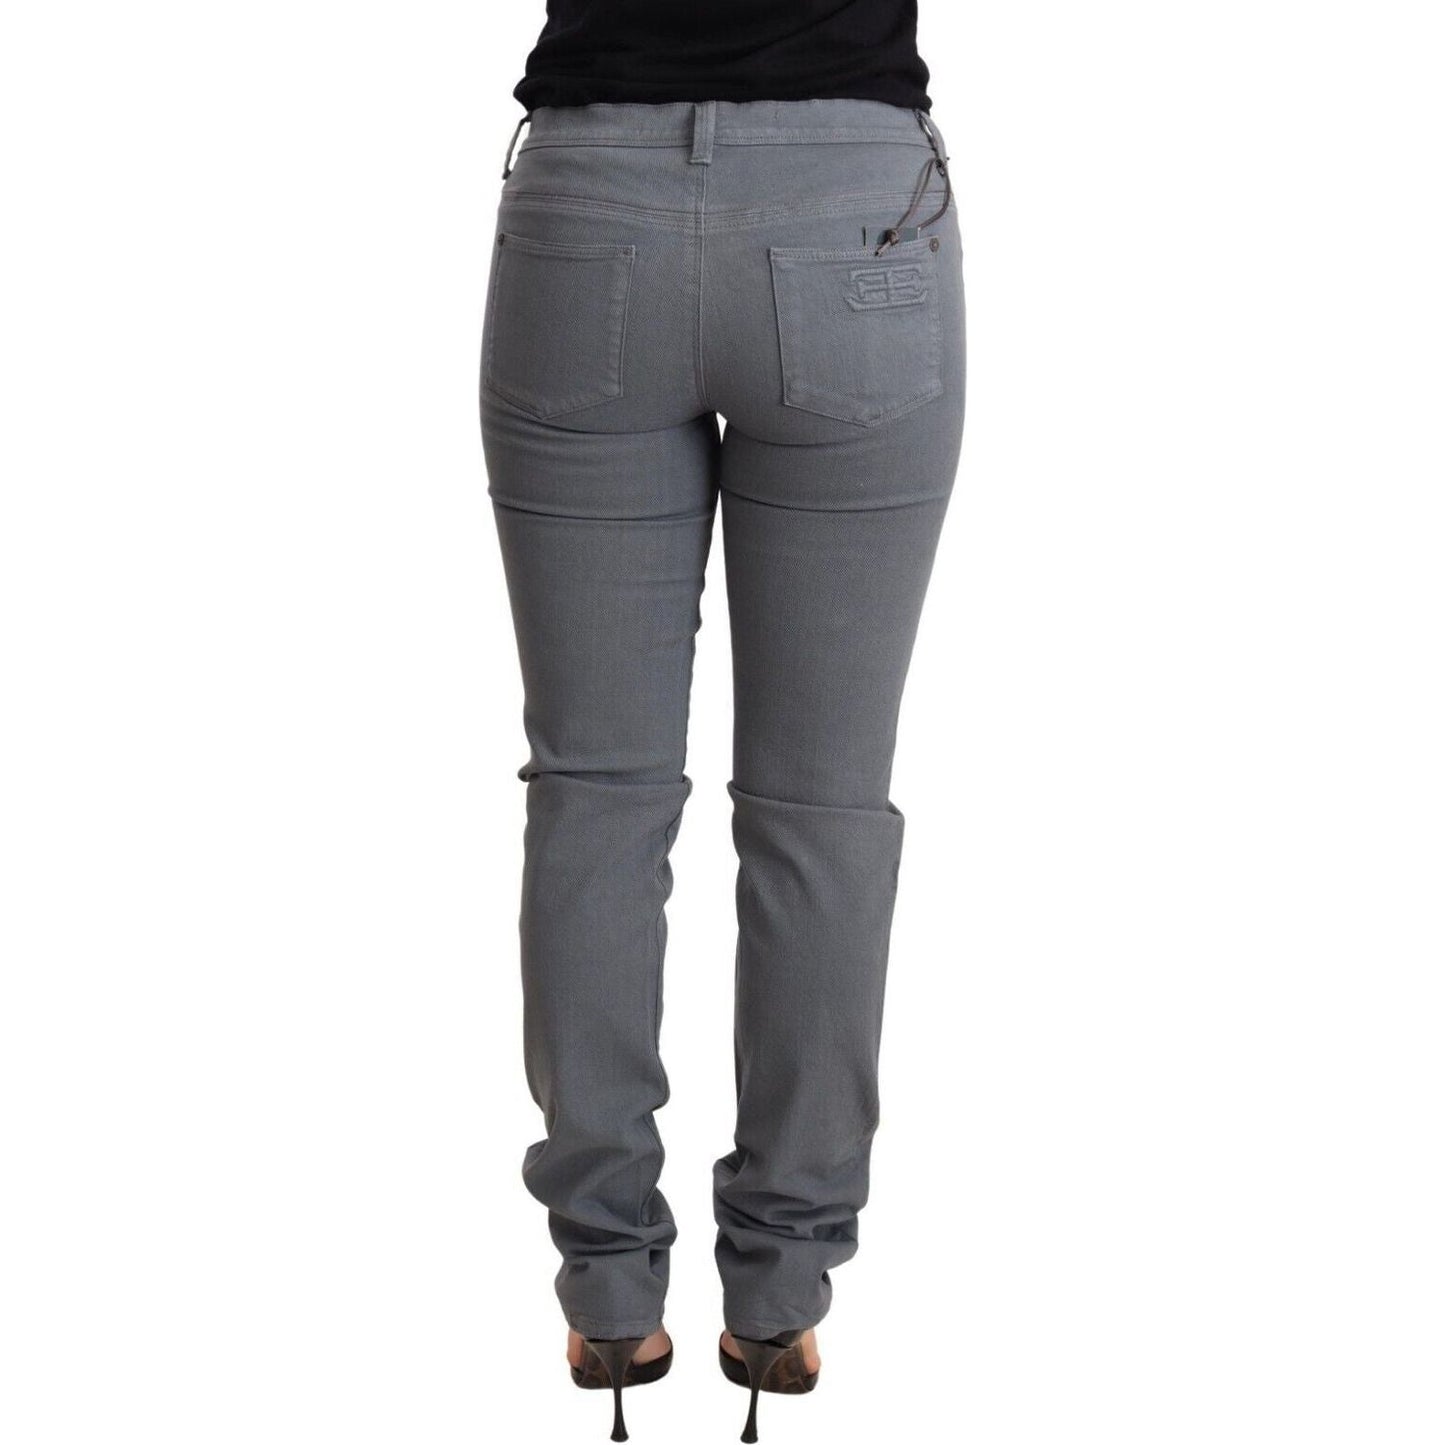 Ermanno Scervino Sleek Gray Low Waist Skinny Jeans Jeans & Pants gray-low-waist-skinny-slim-trouser-cotton-jeans